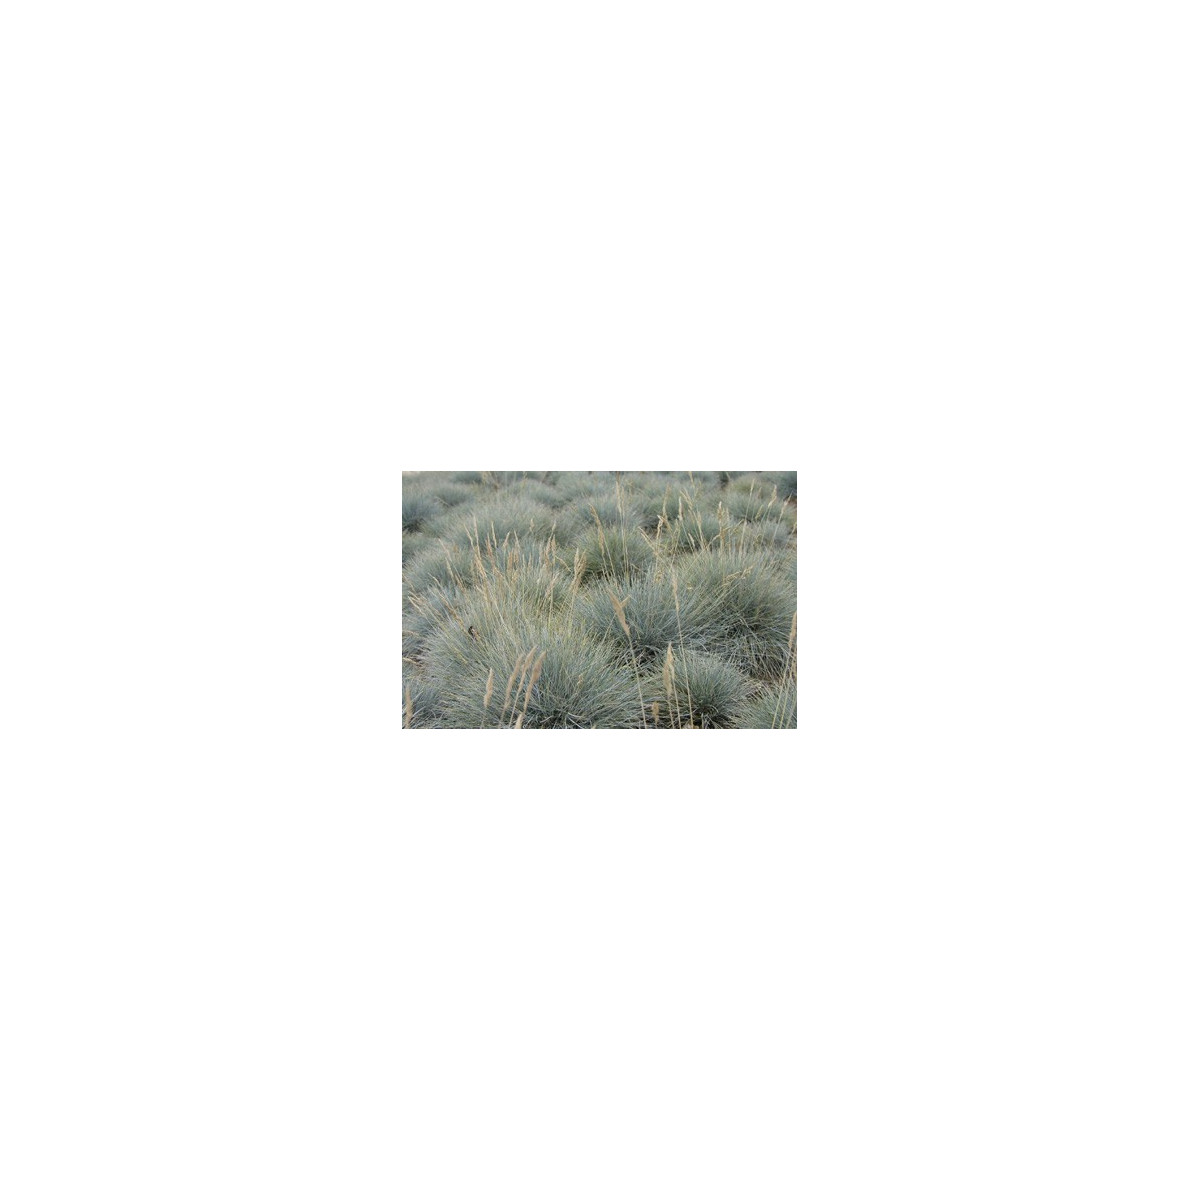 Okrasná tráva - Kostřava coxii - Festuca coxii - semena - 5 ks